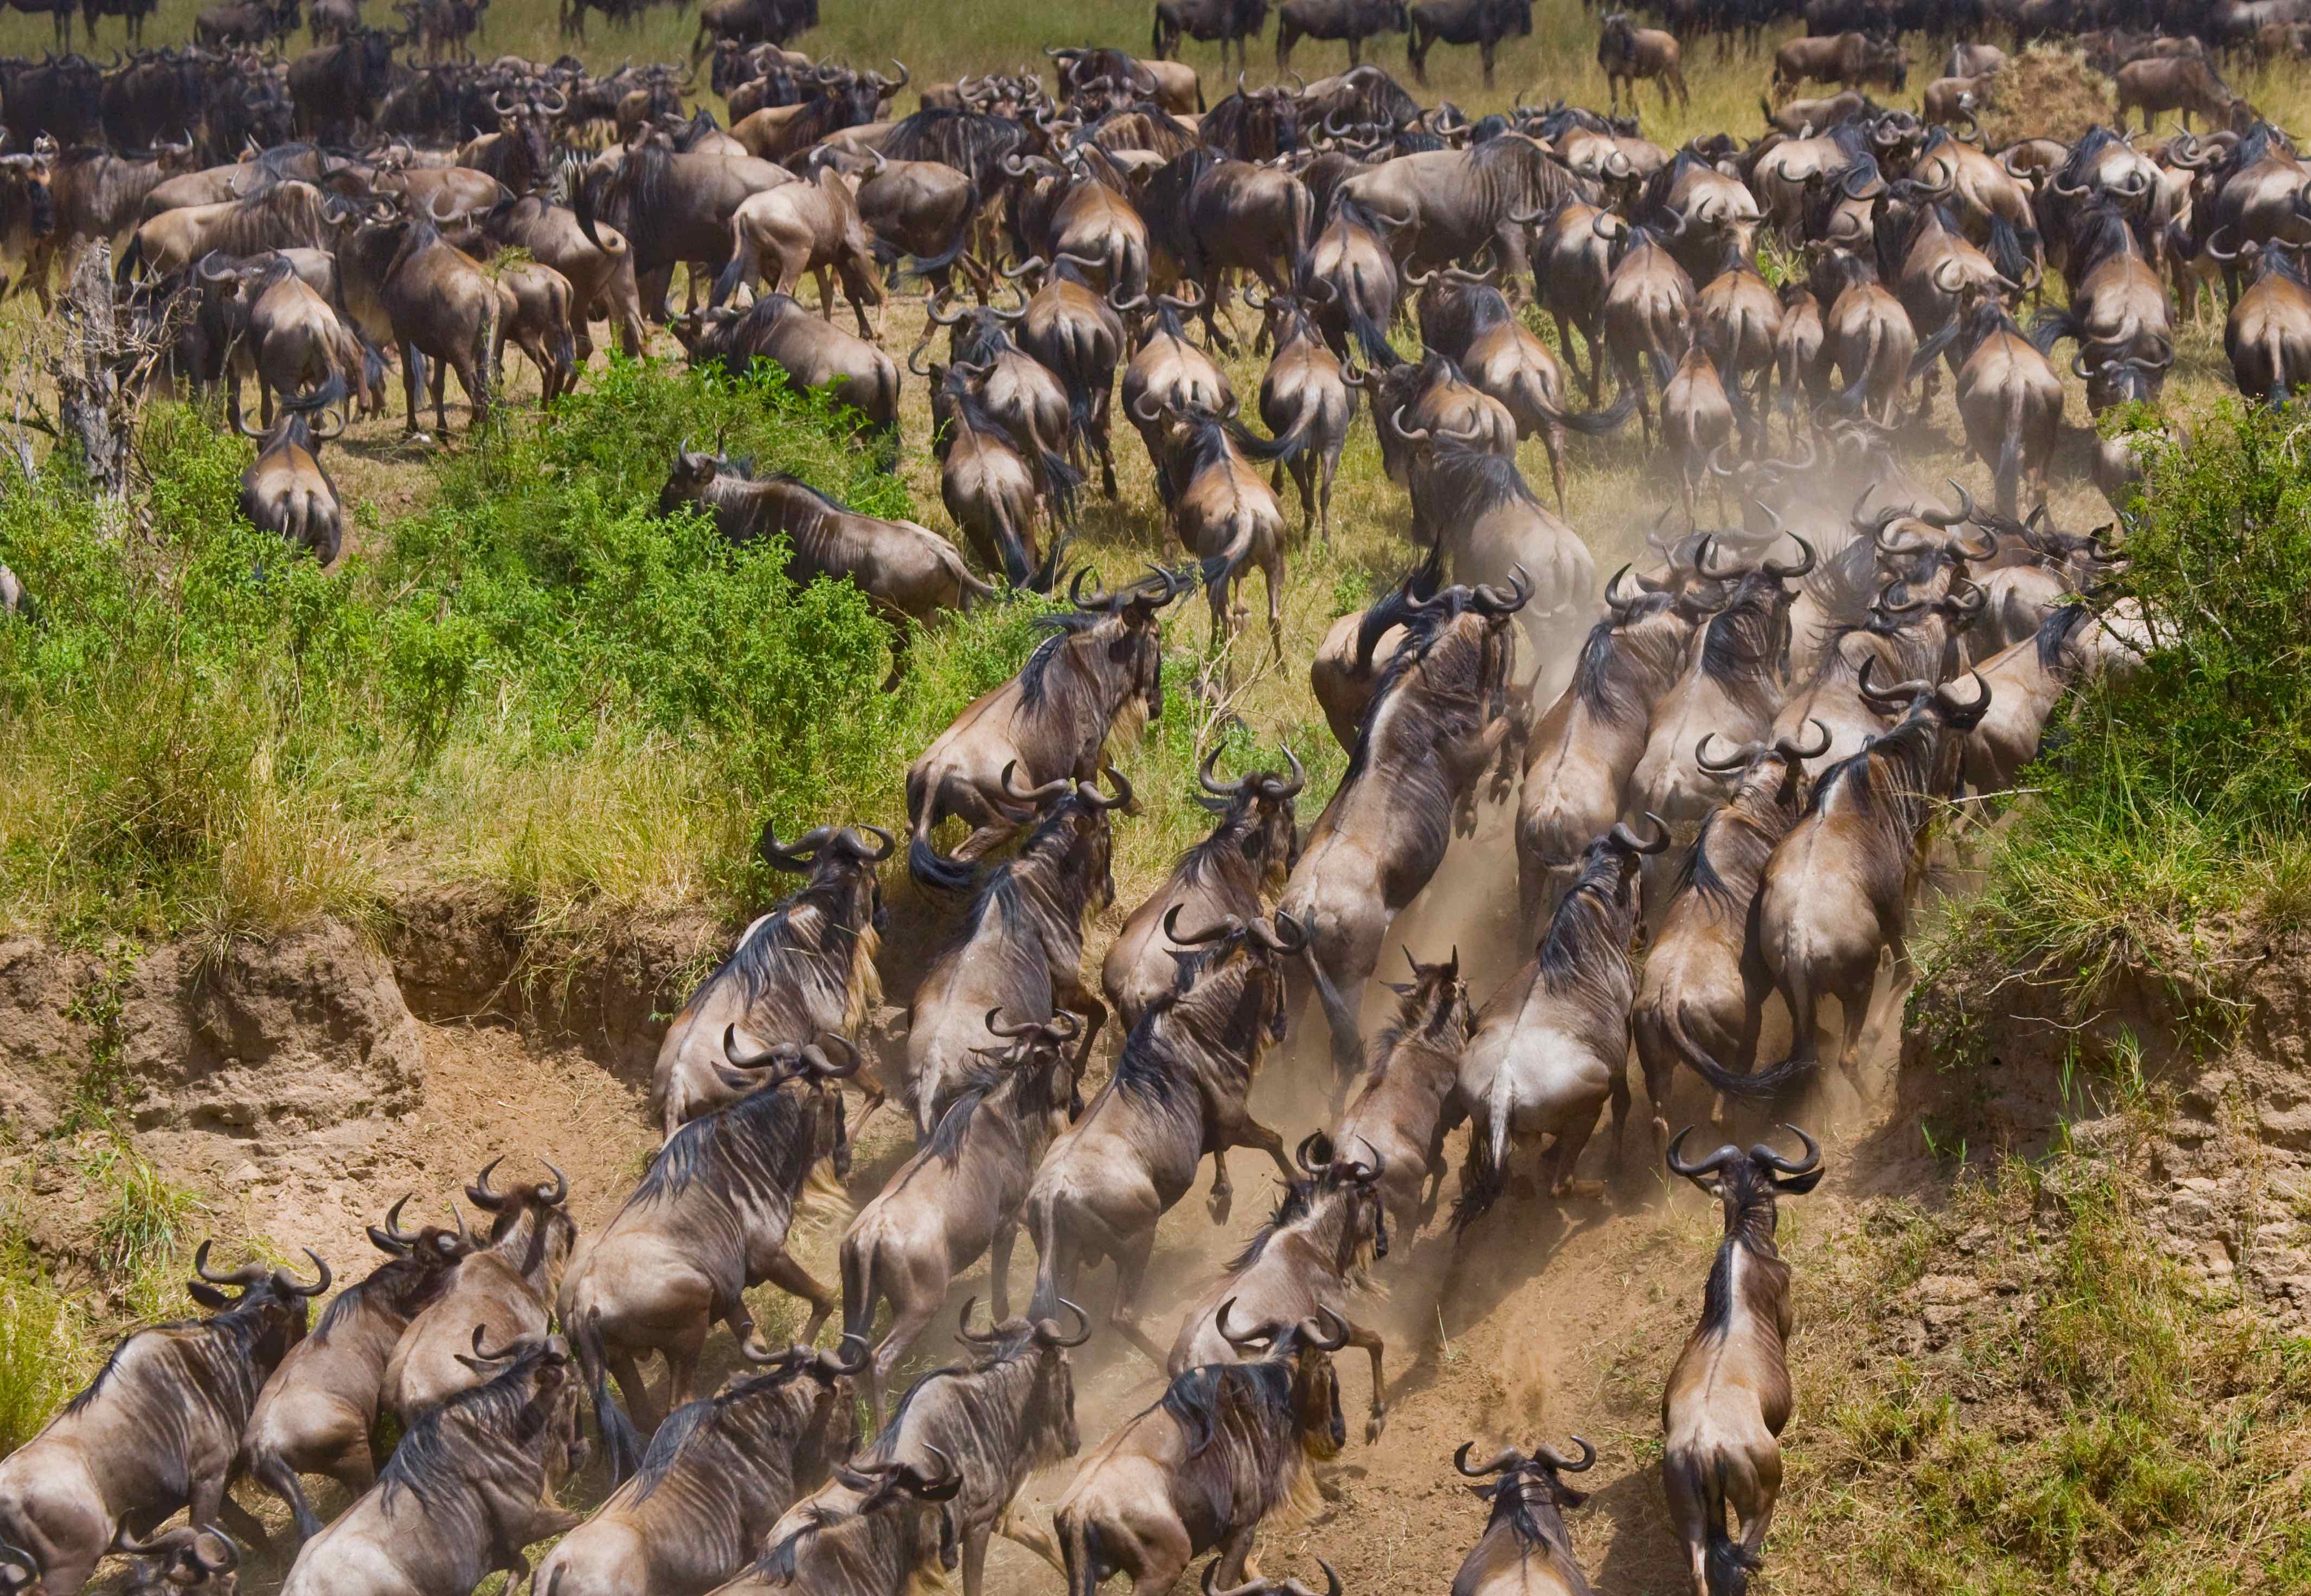 A wildebeest herd runs through the African savannah.